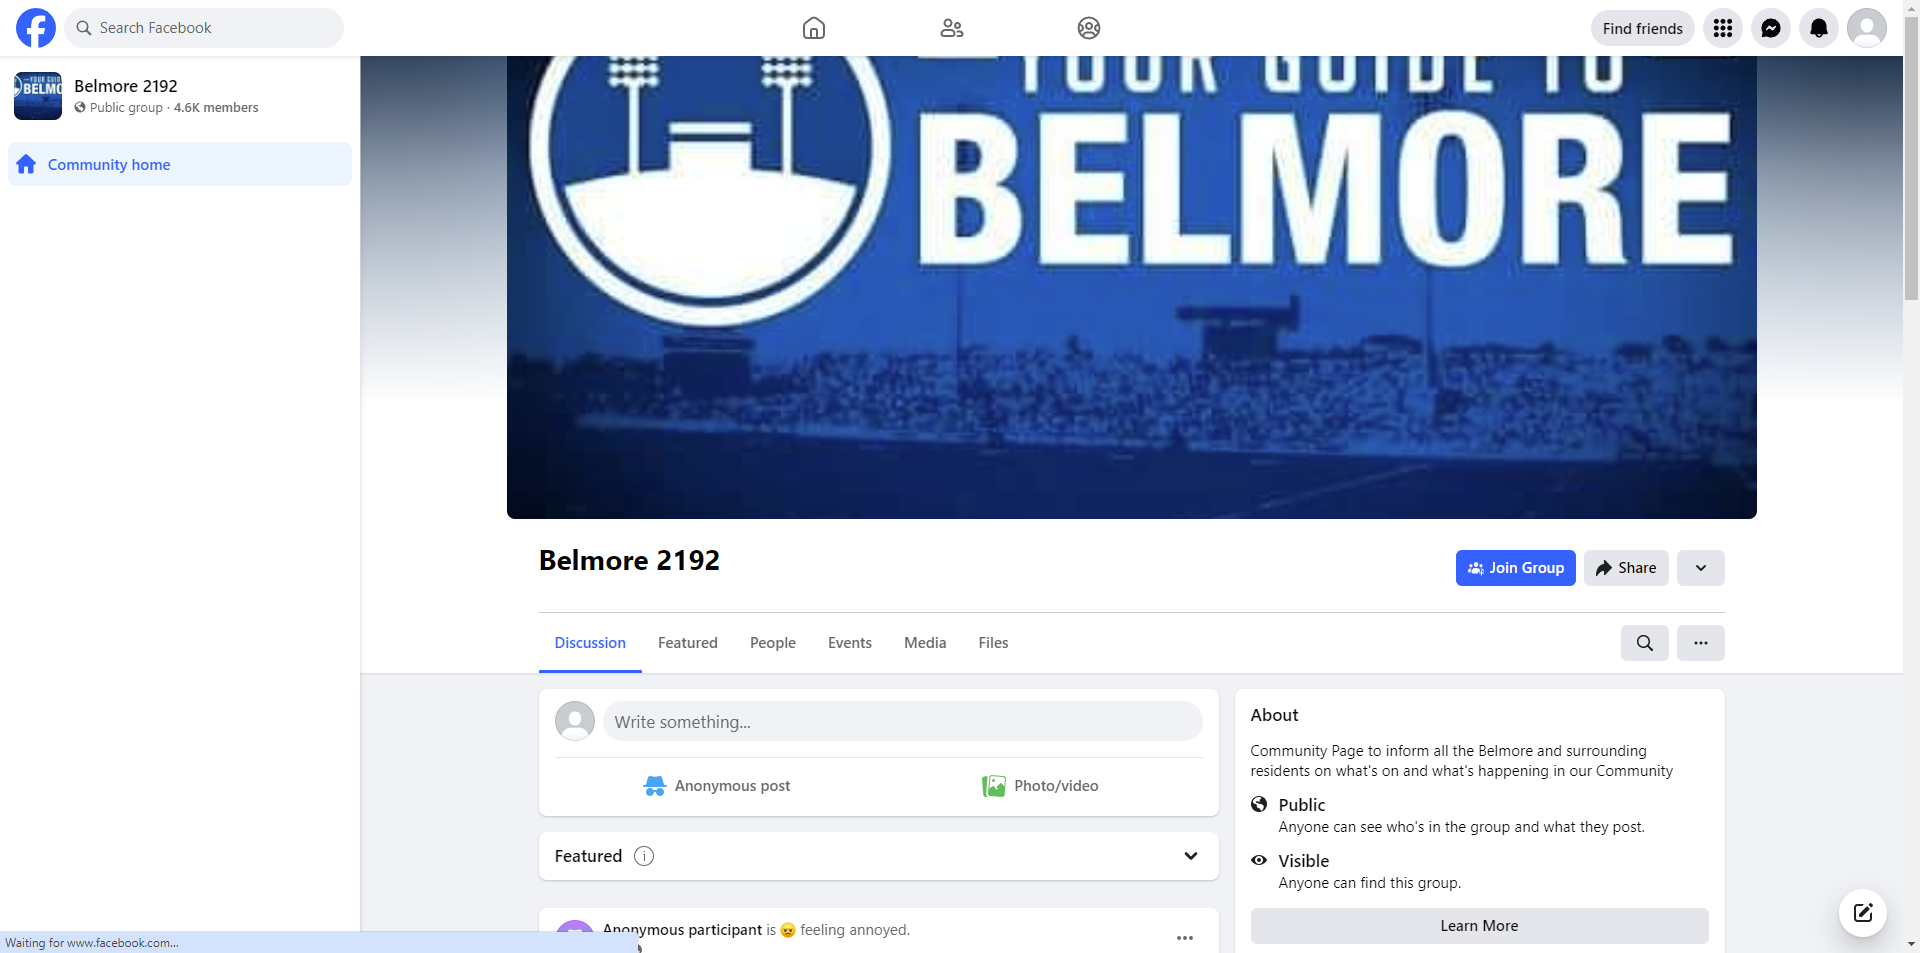 Belmore 2192